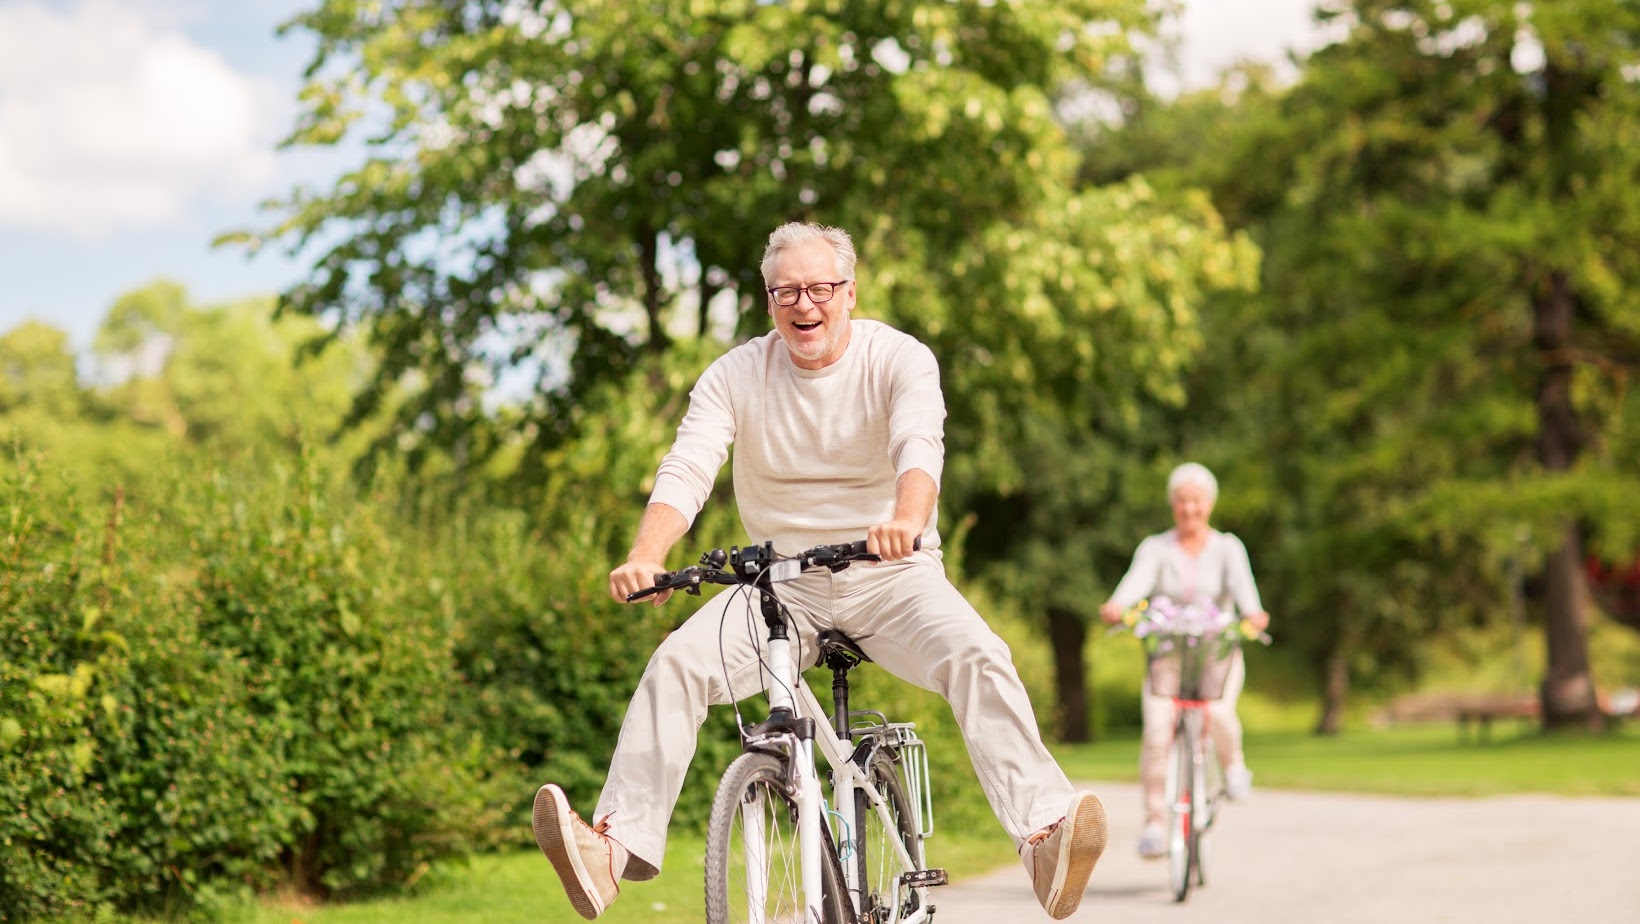 How to Help Seniors Experience More Joy